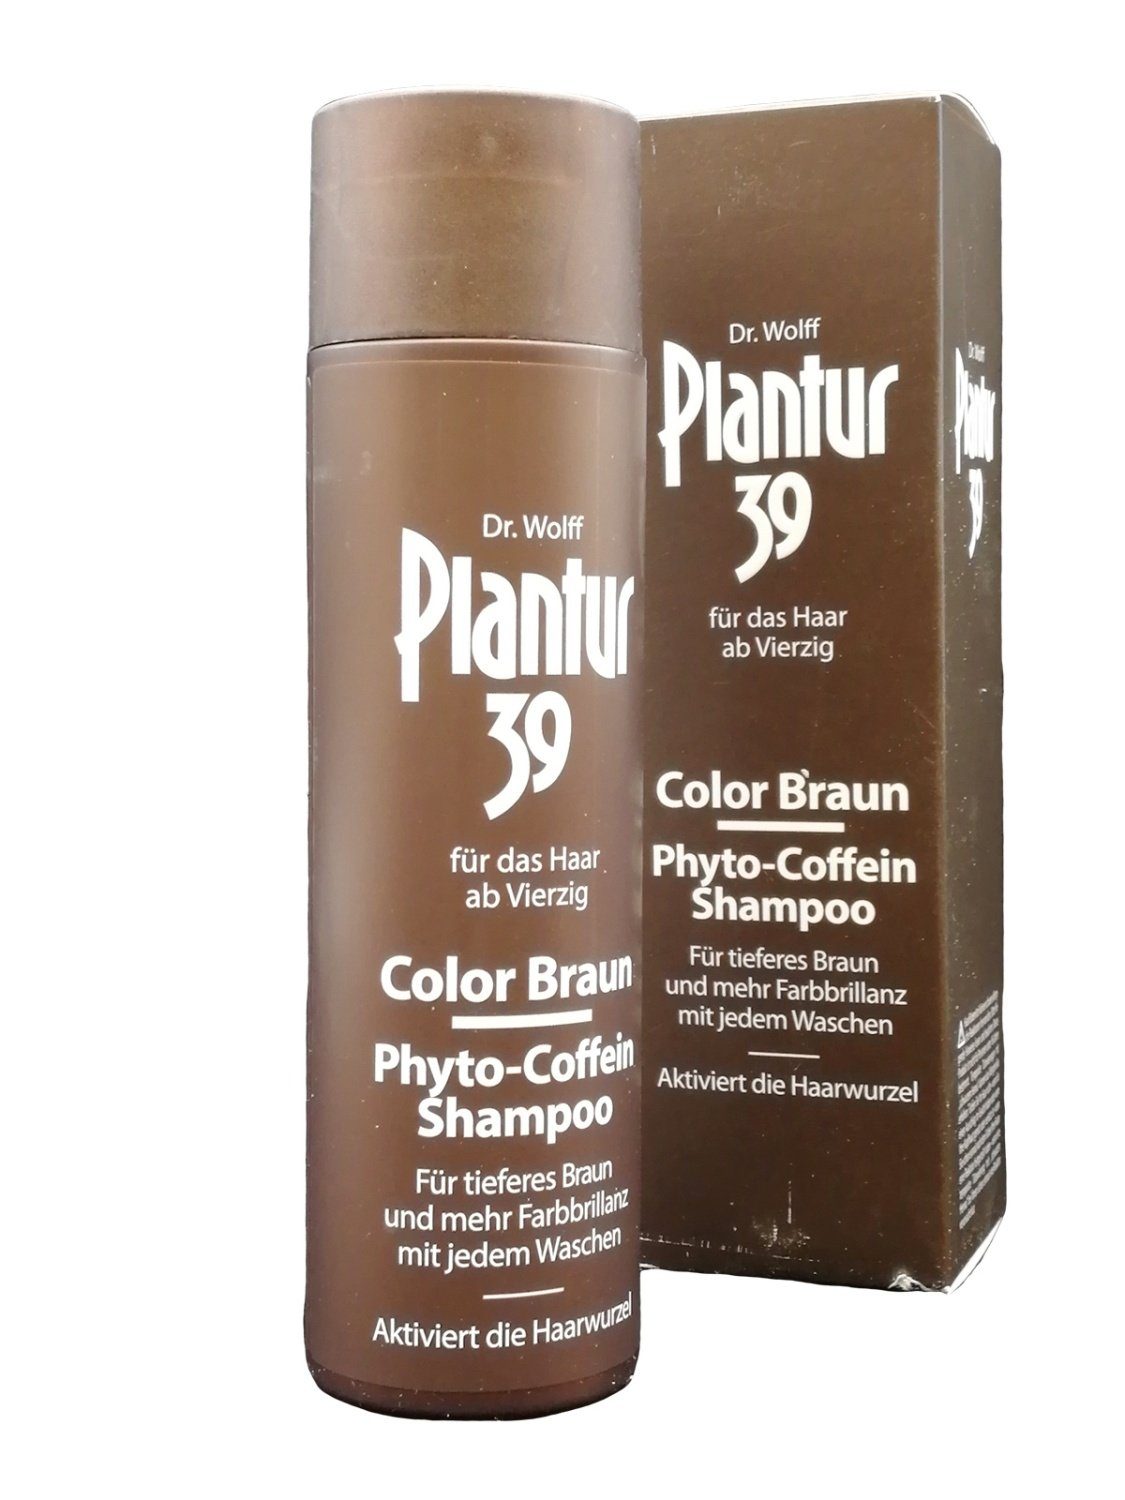 Dr. Kurt Wolff GmbH & Haarshampoo 250 Braun Color PLANTUR Phyto-Coffein-Shampoo, ml Co. 39 KG